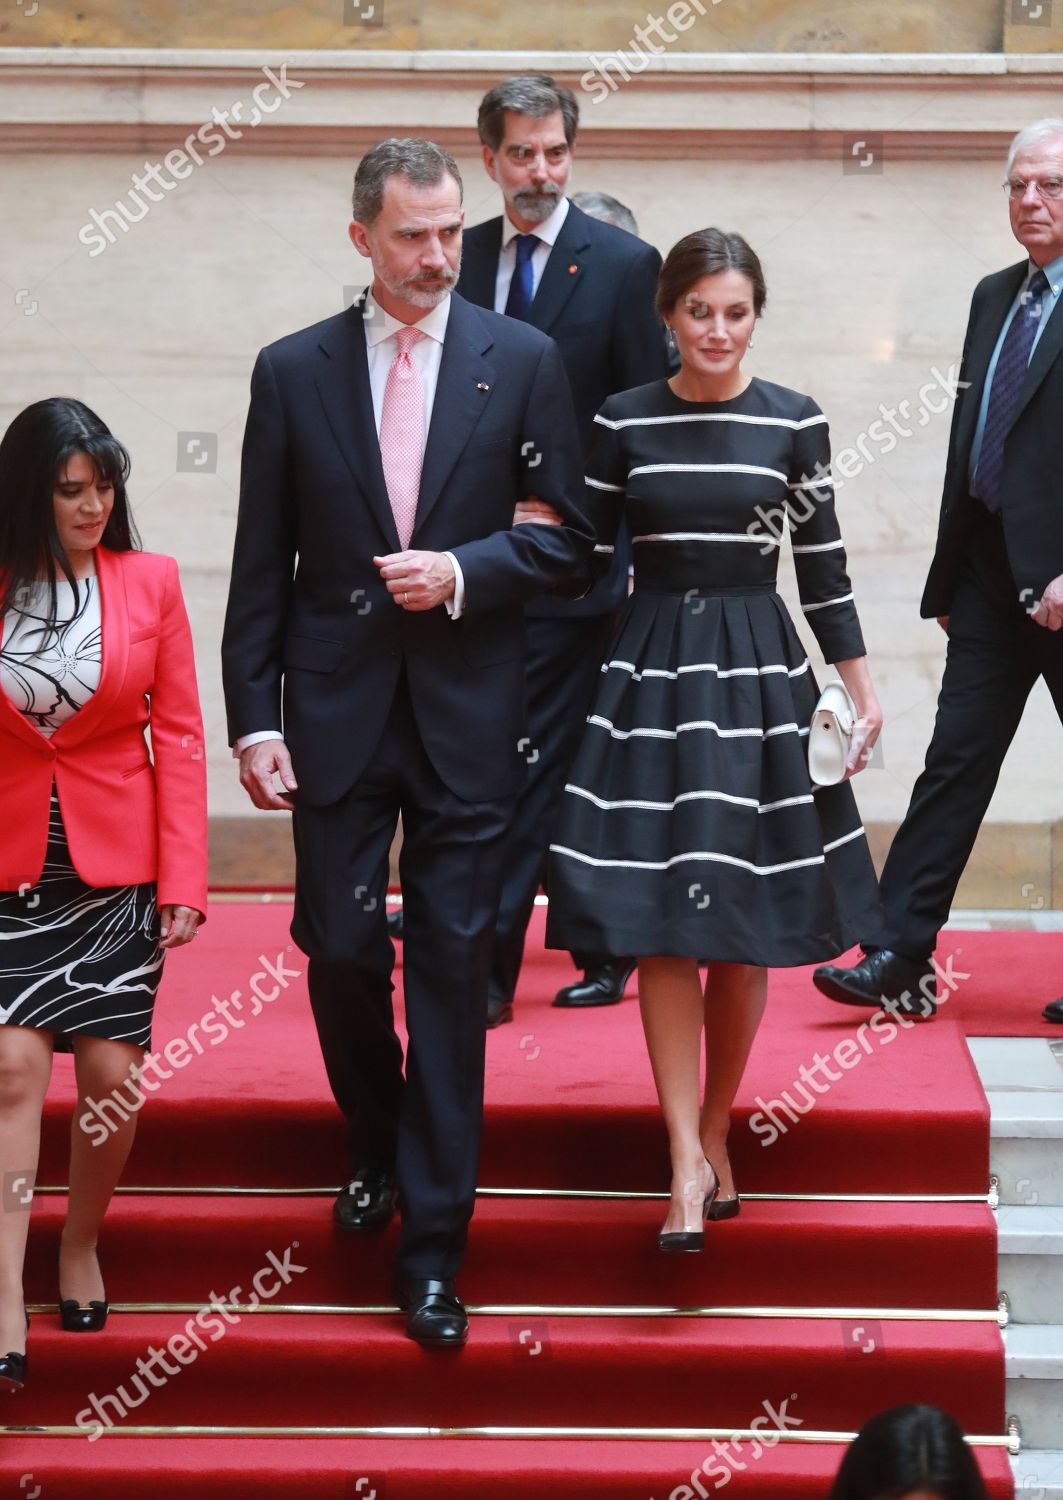 spanish-royals-visit-to-lima-peru-shutterstock-editorial-9977226ae.jpg